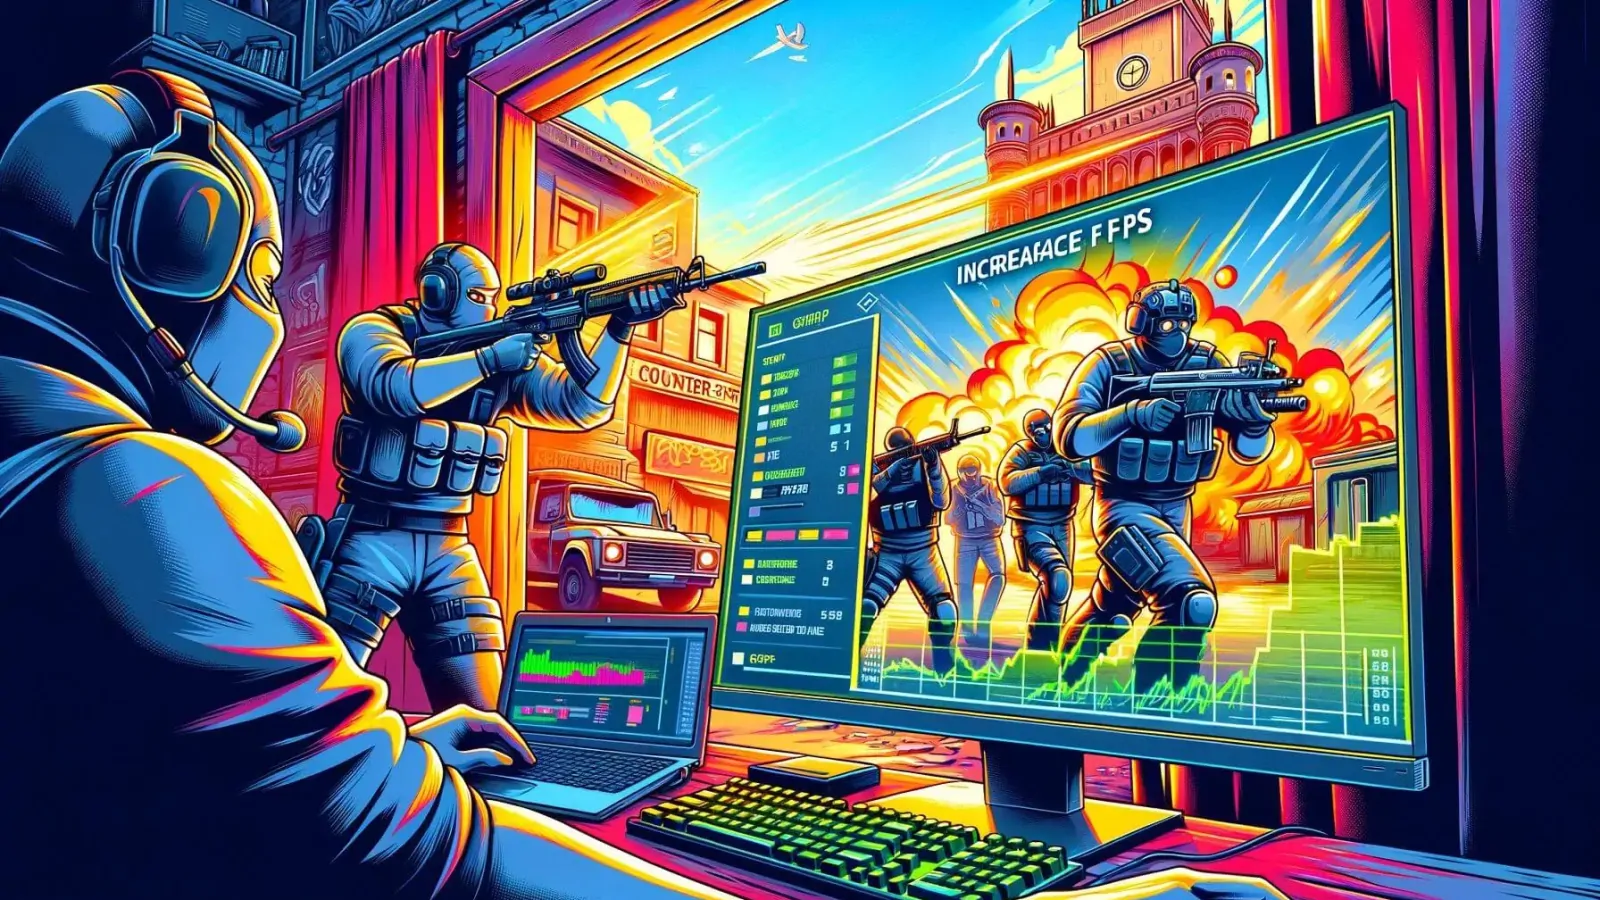 Как повысить FPS в CS:GO? - Форум Counter-Strike: Global Offensive